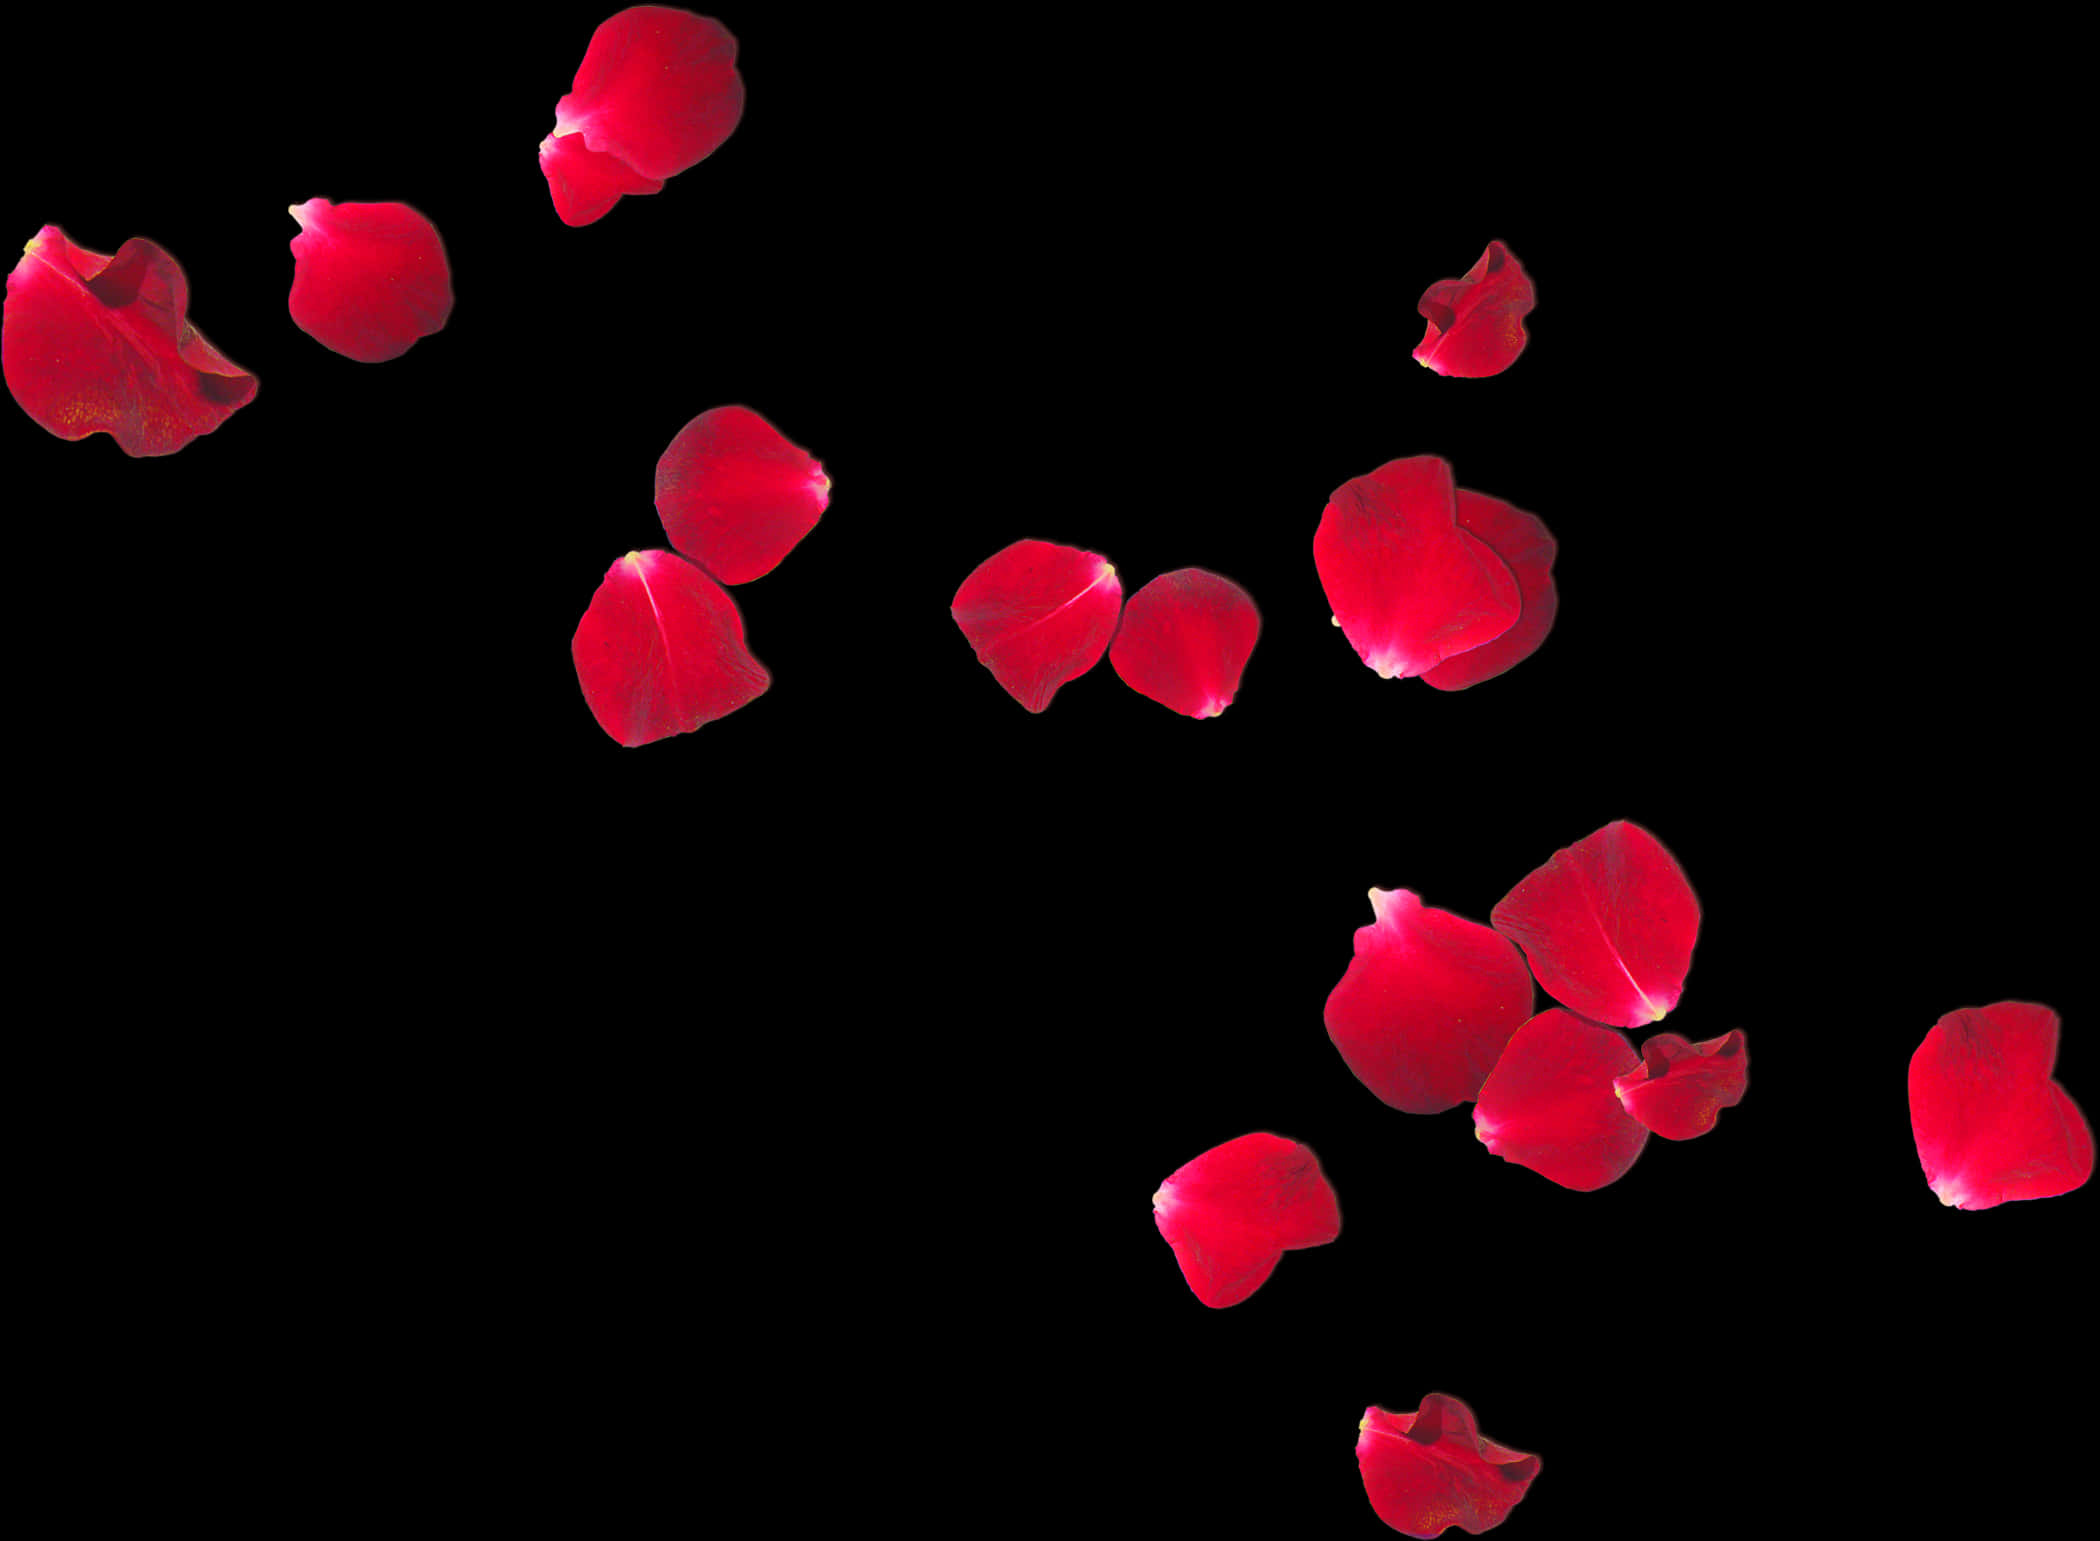 Red Rose Petals Fallingon Black Background PNG image